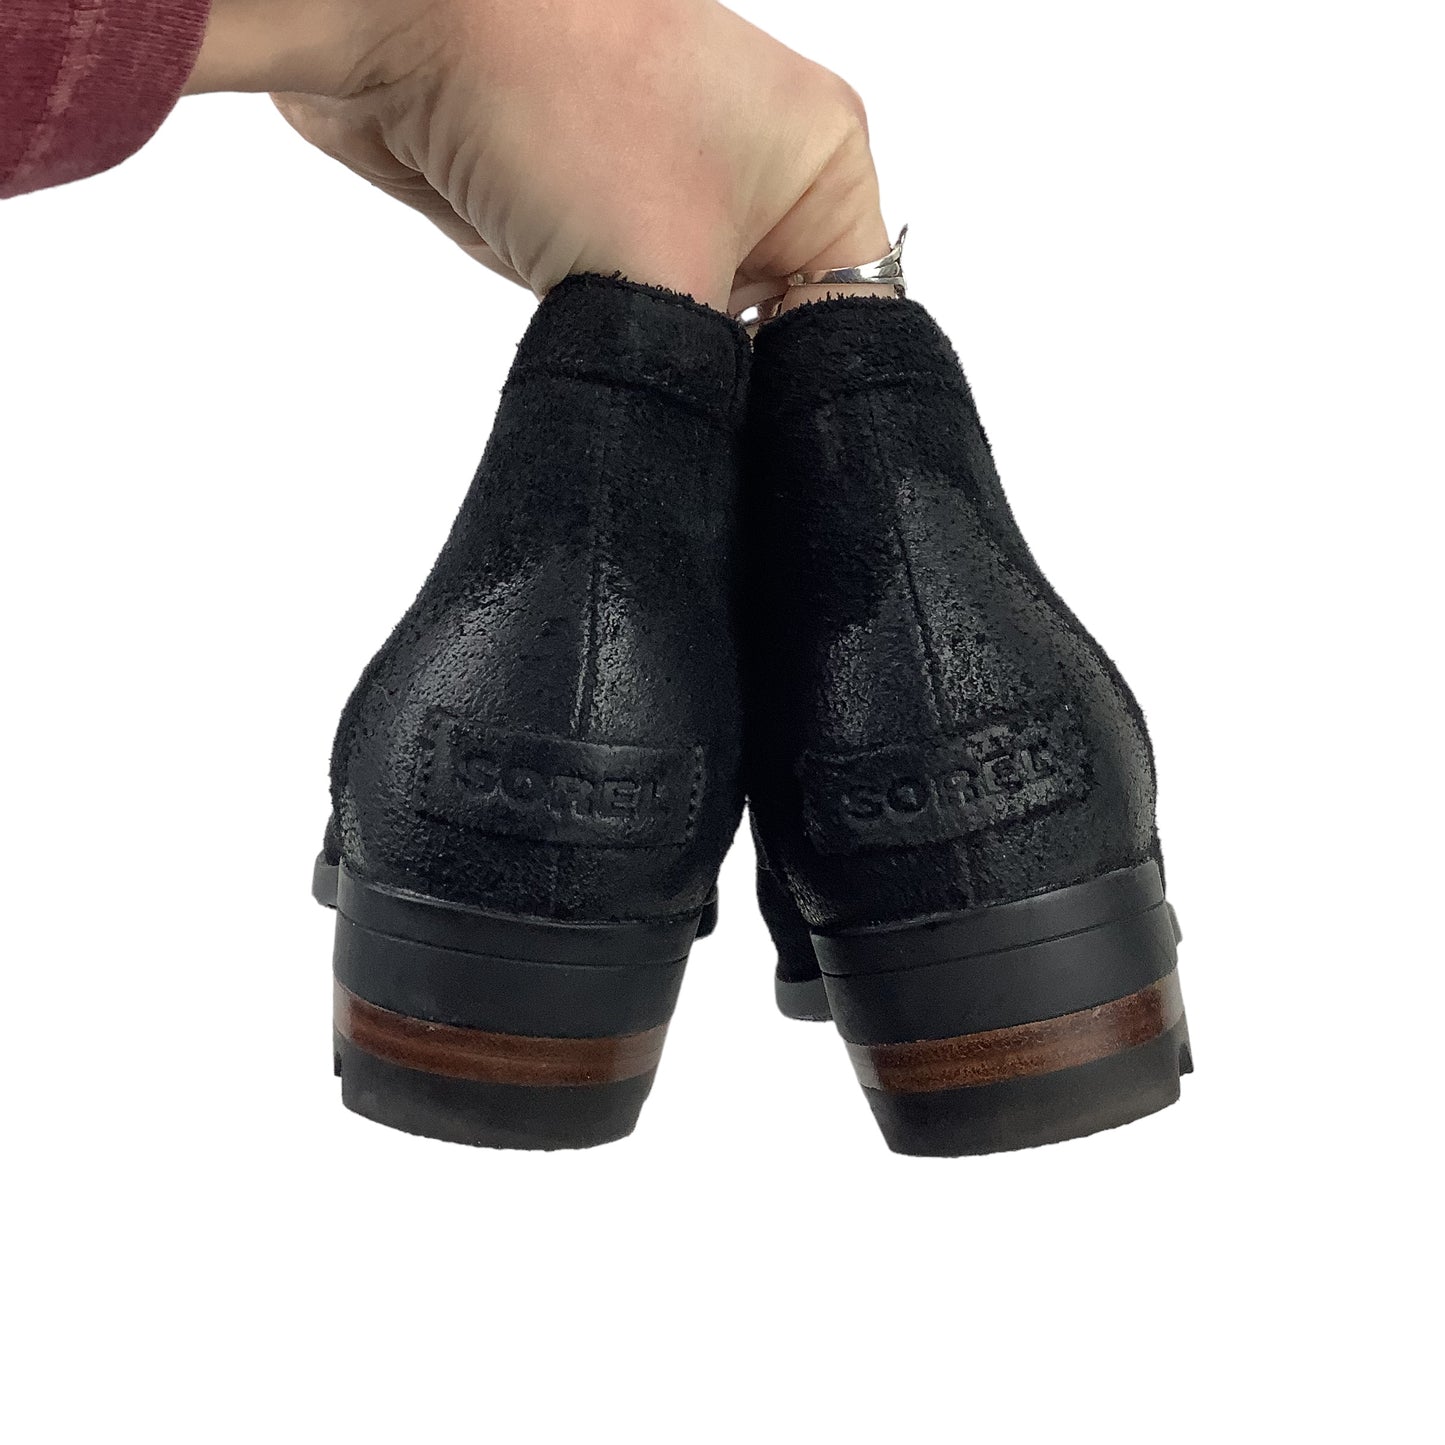 Boots Designer By Sorel  Size: 9.5